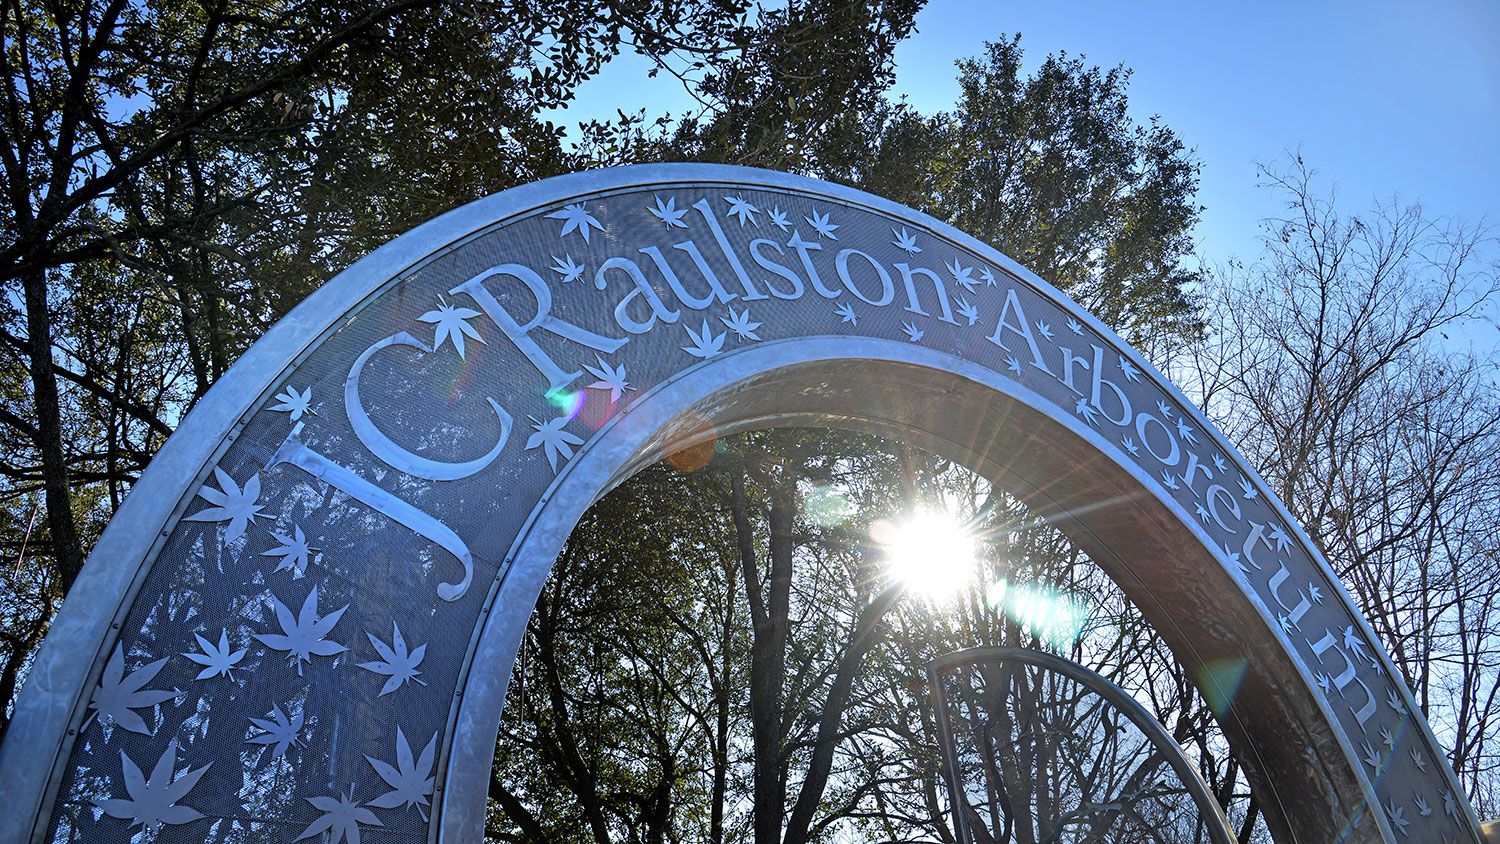 Front gate of JC Raulston Arboretum